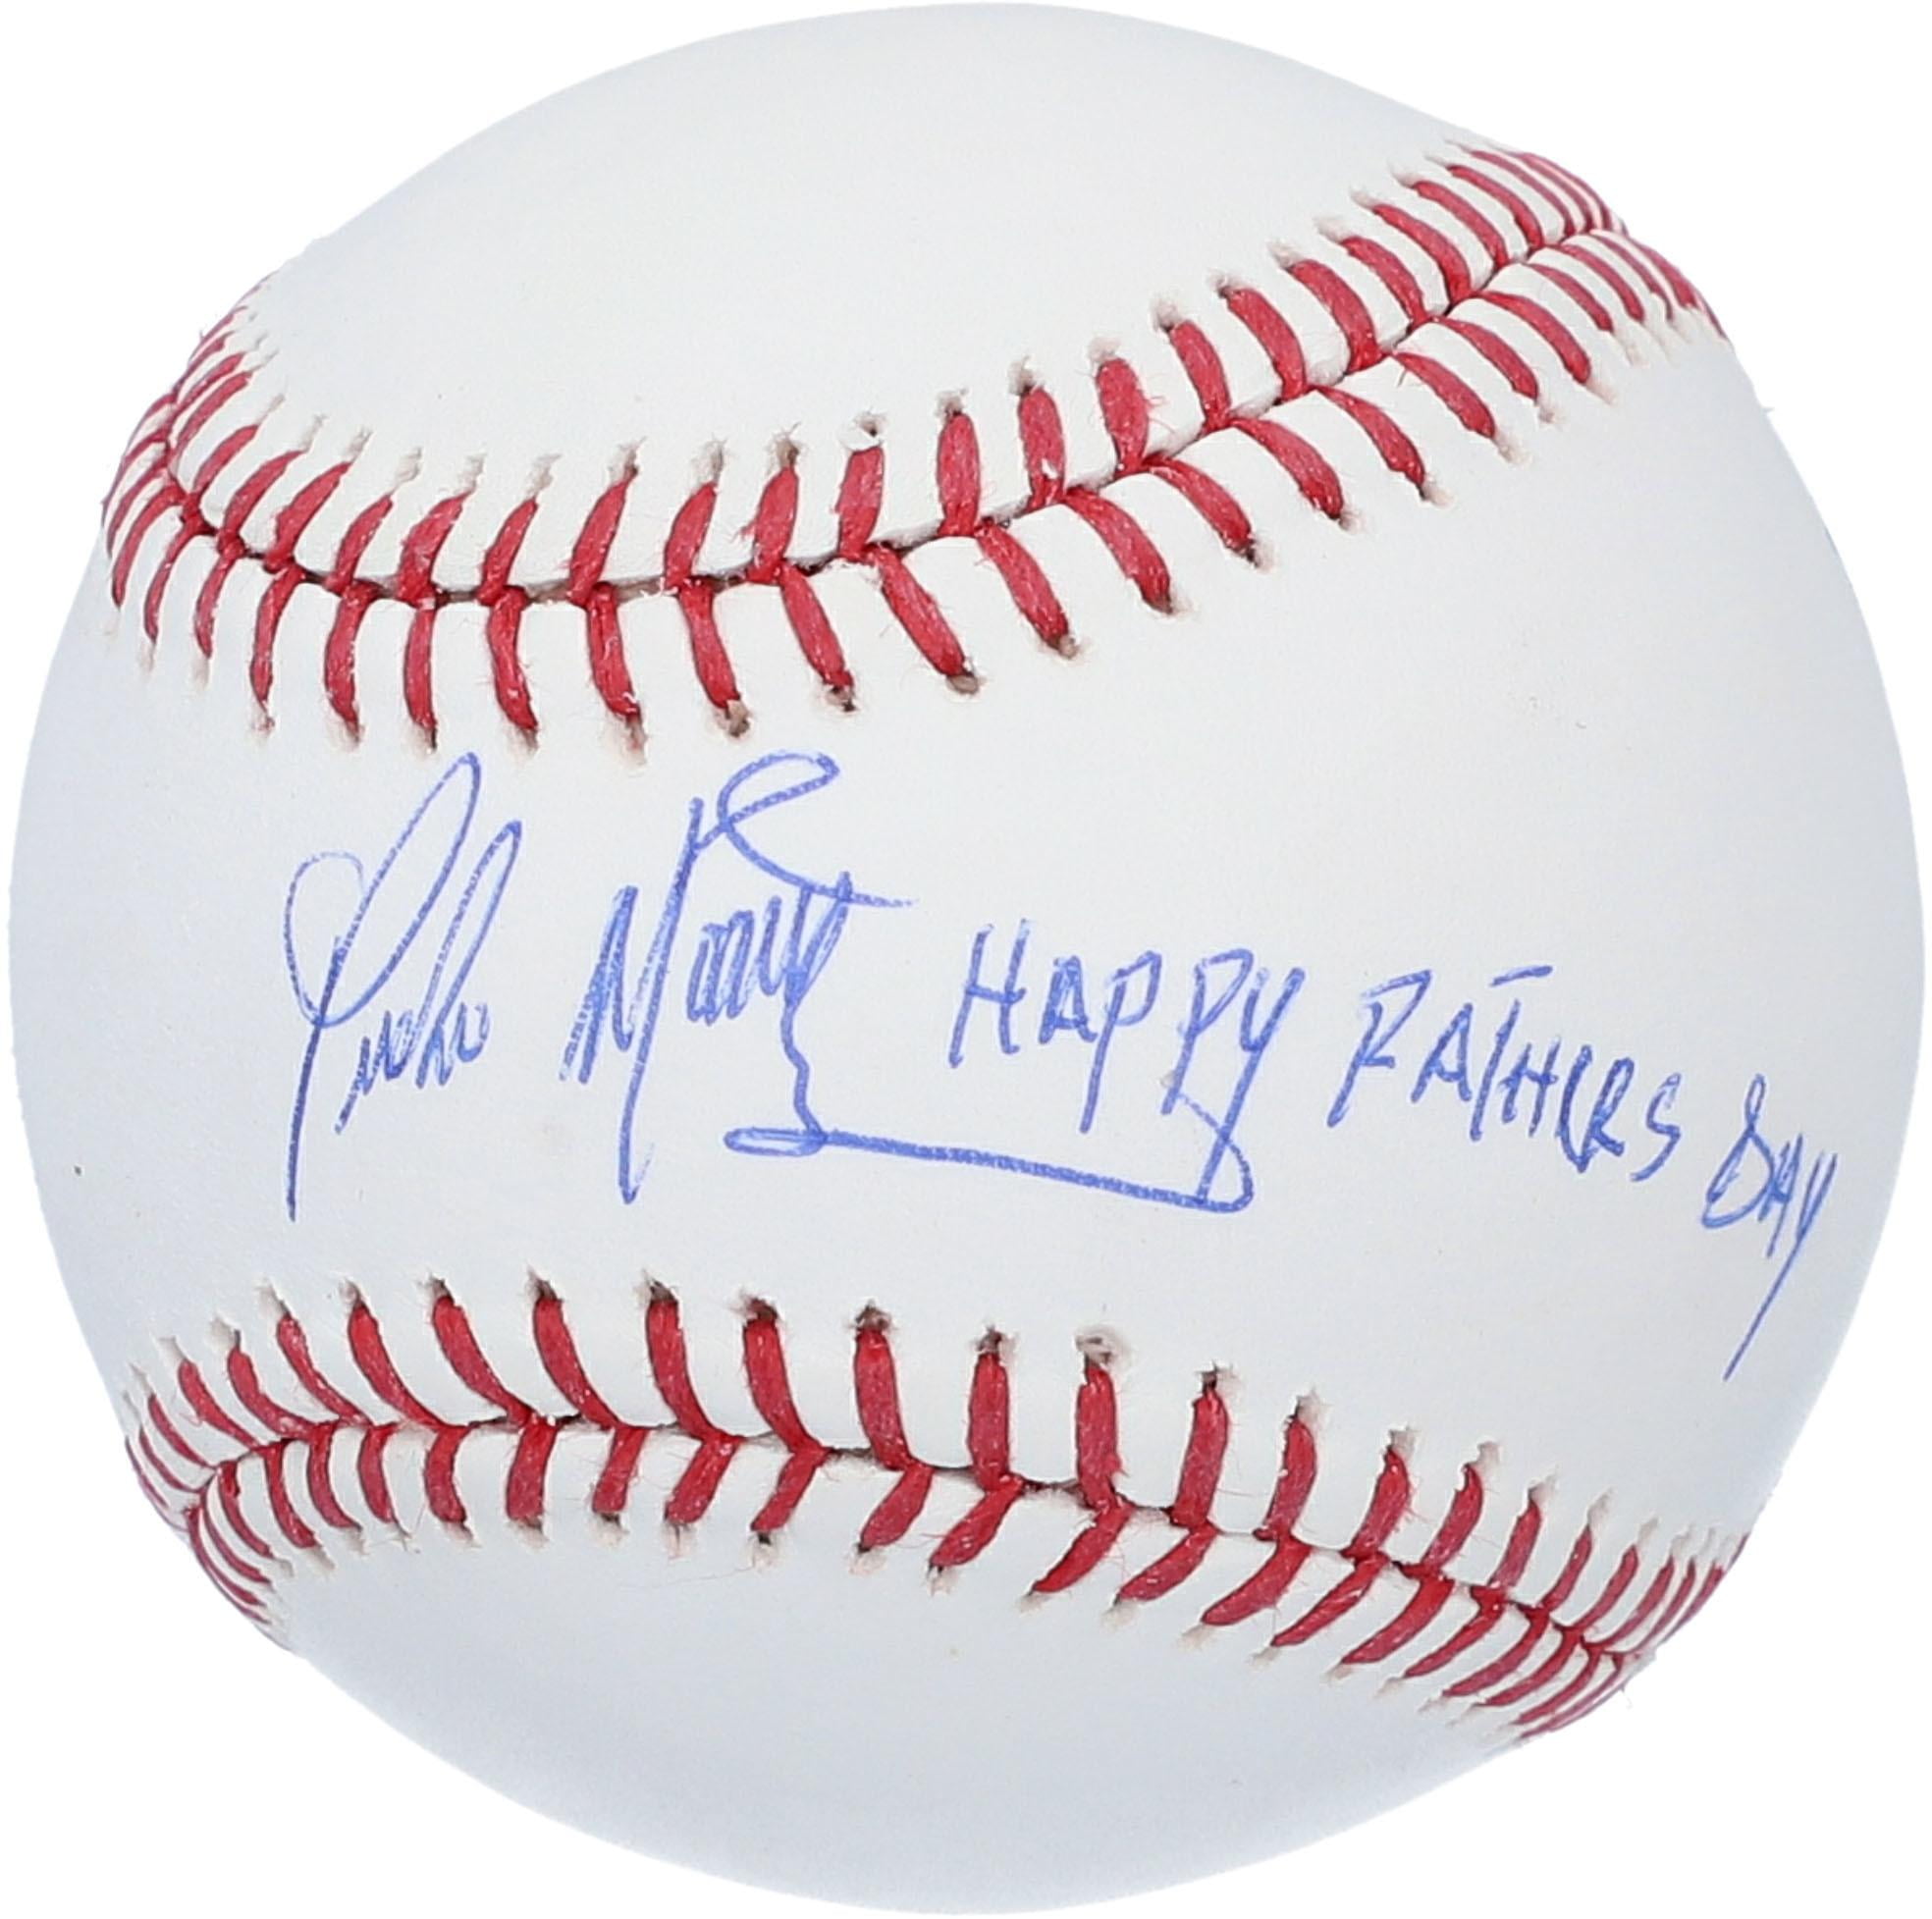 pedro martinez autographed baseball